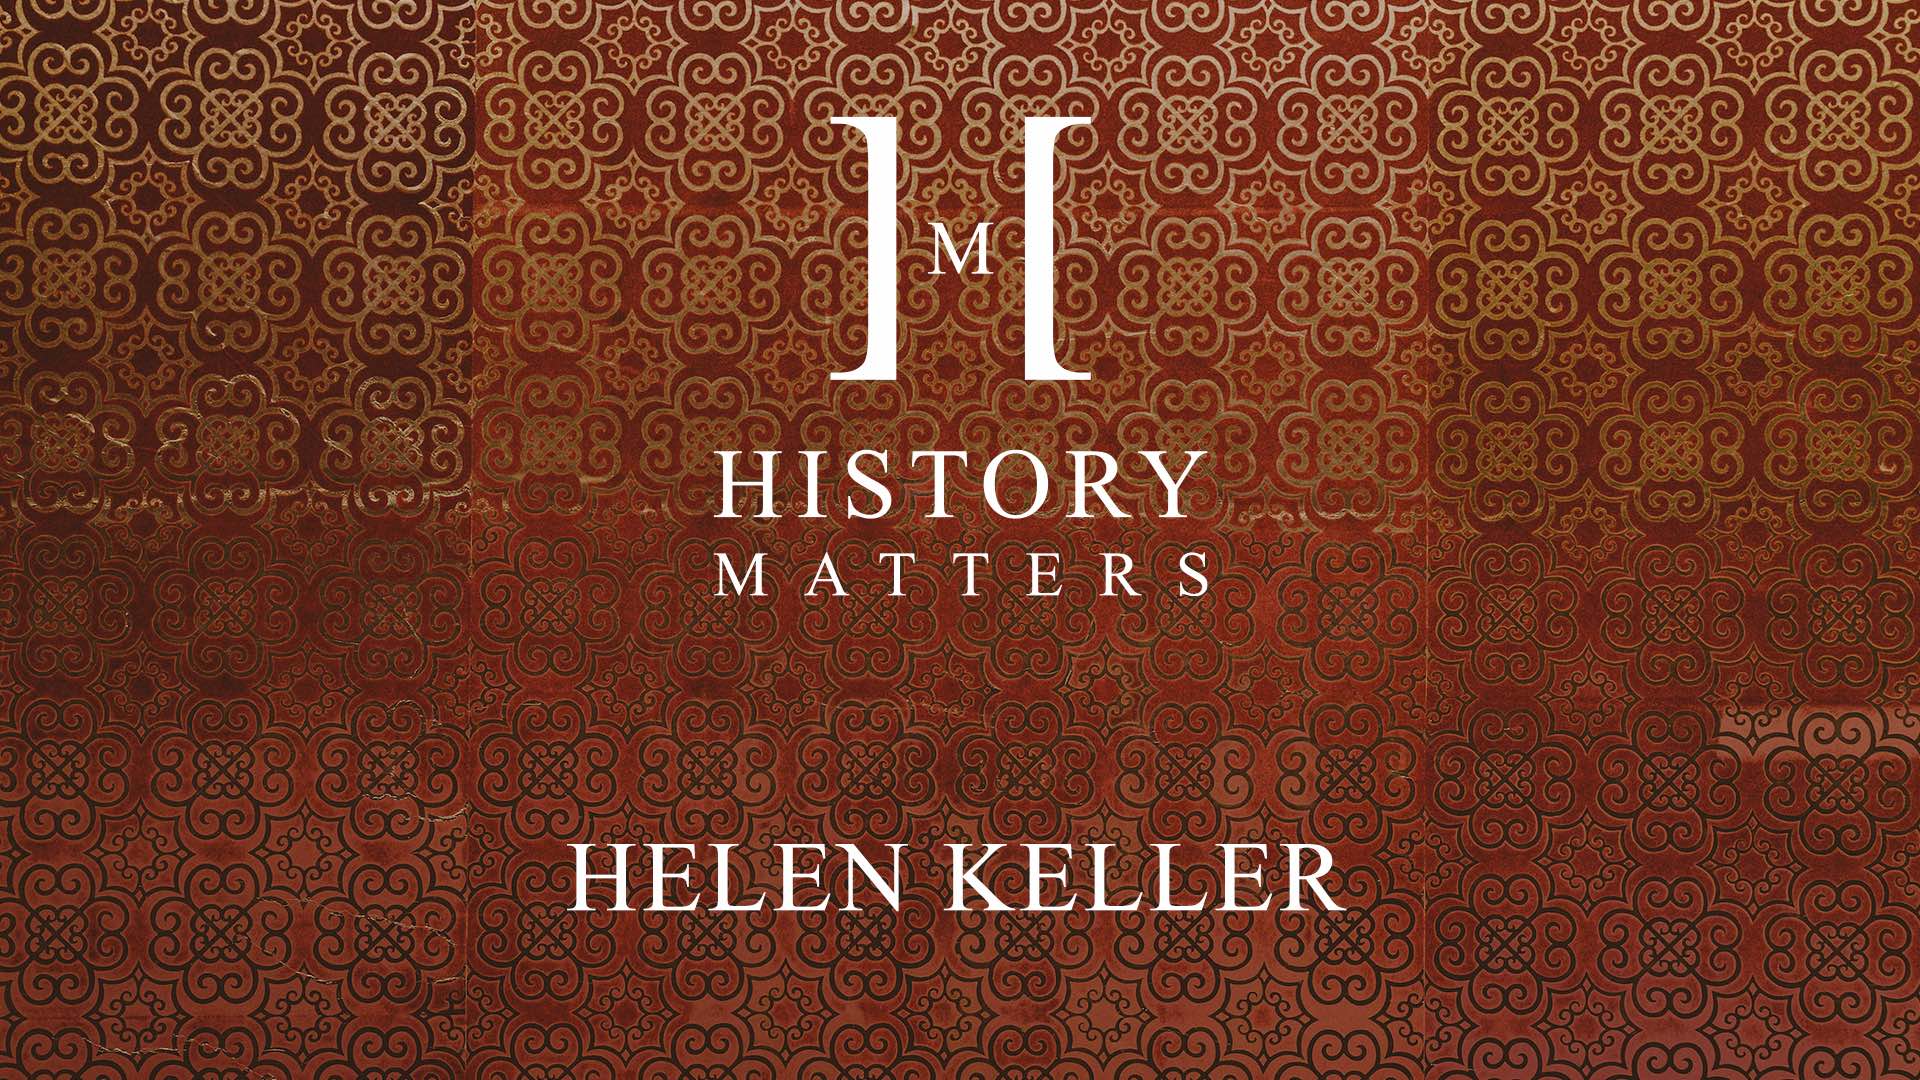 White HM Helen Keller logo with background of red patterned tiles